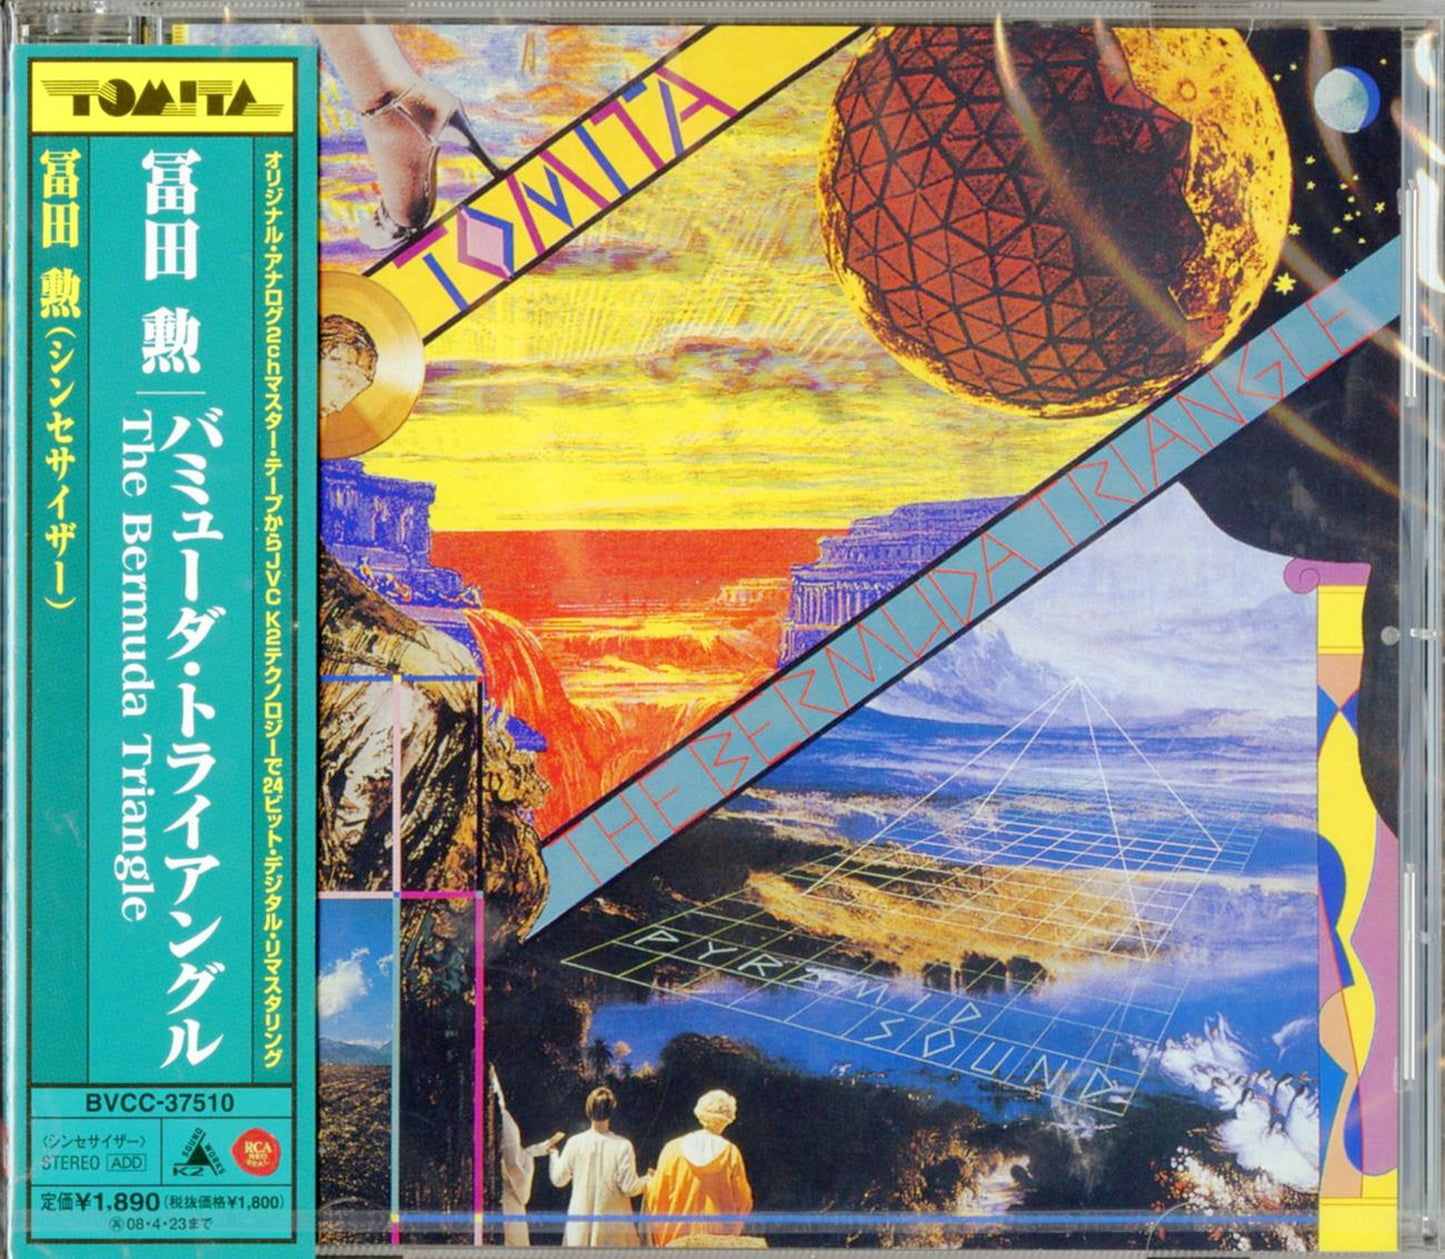 Isao Tomita - The Bermuda Triangle - Japan CD